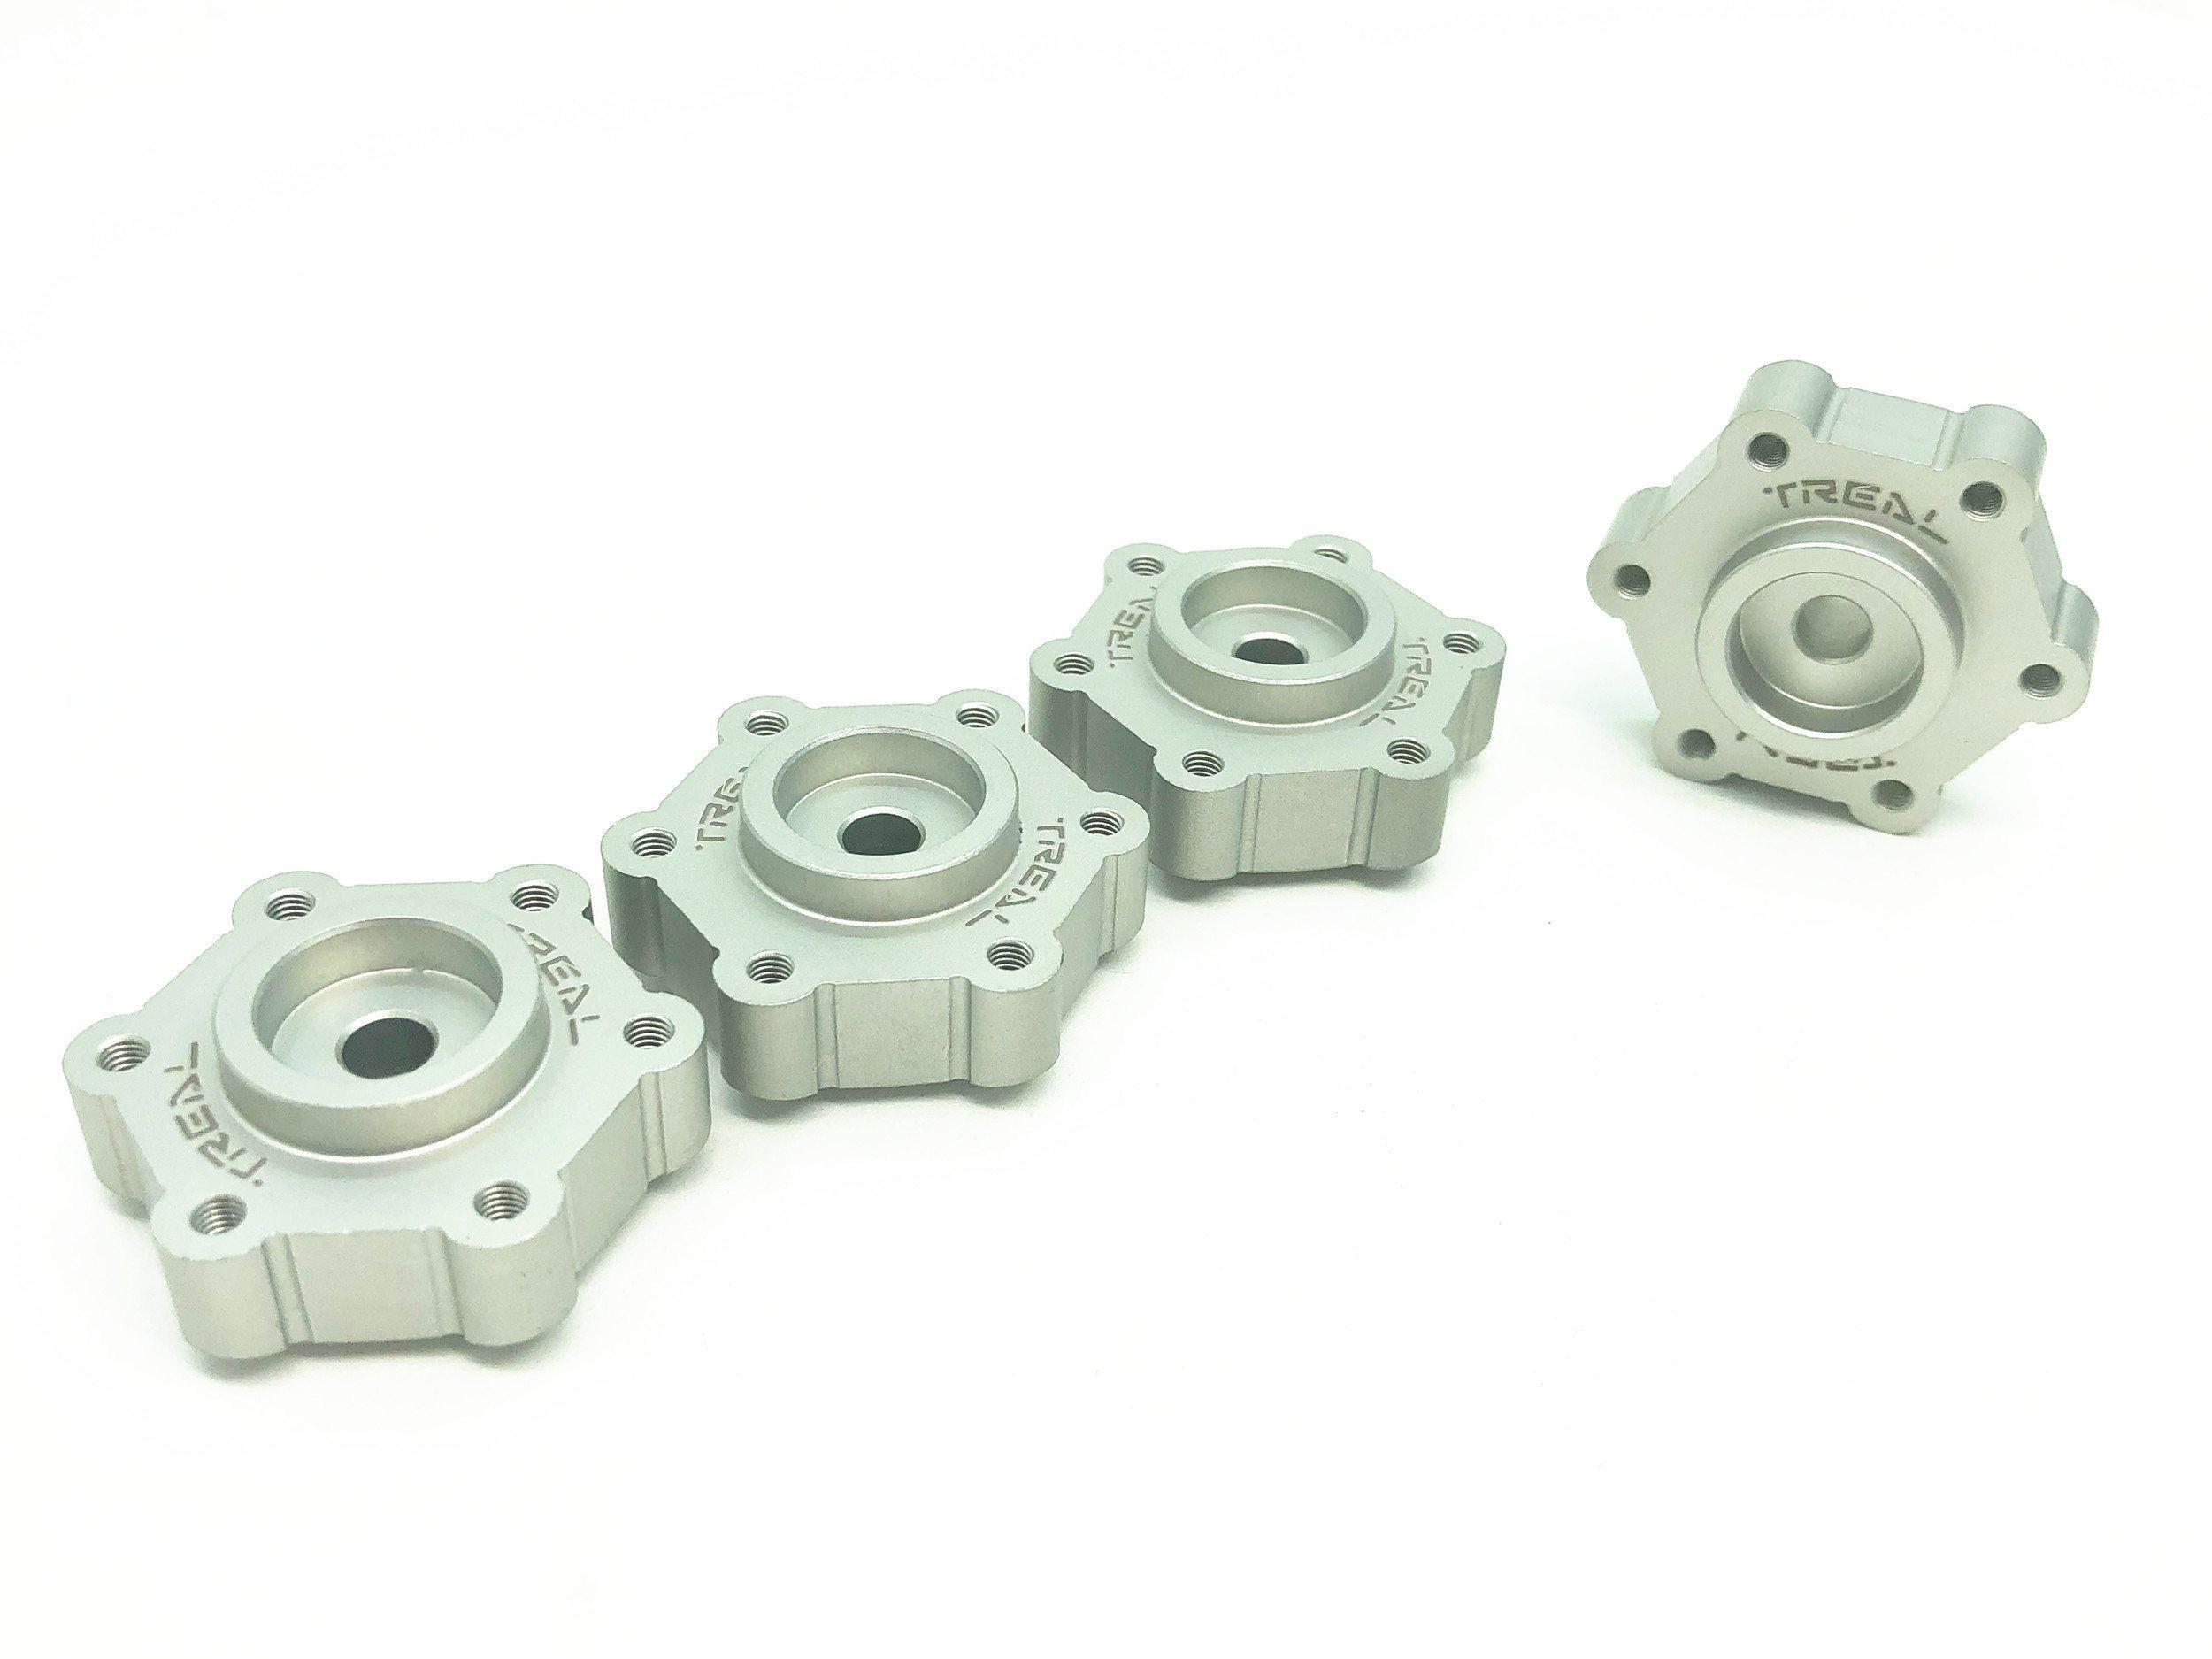 Treal Aluminum Wheel Hub Spacer +0mm (4) pcs for Losi LMT (Silver) ...